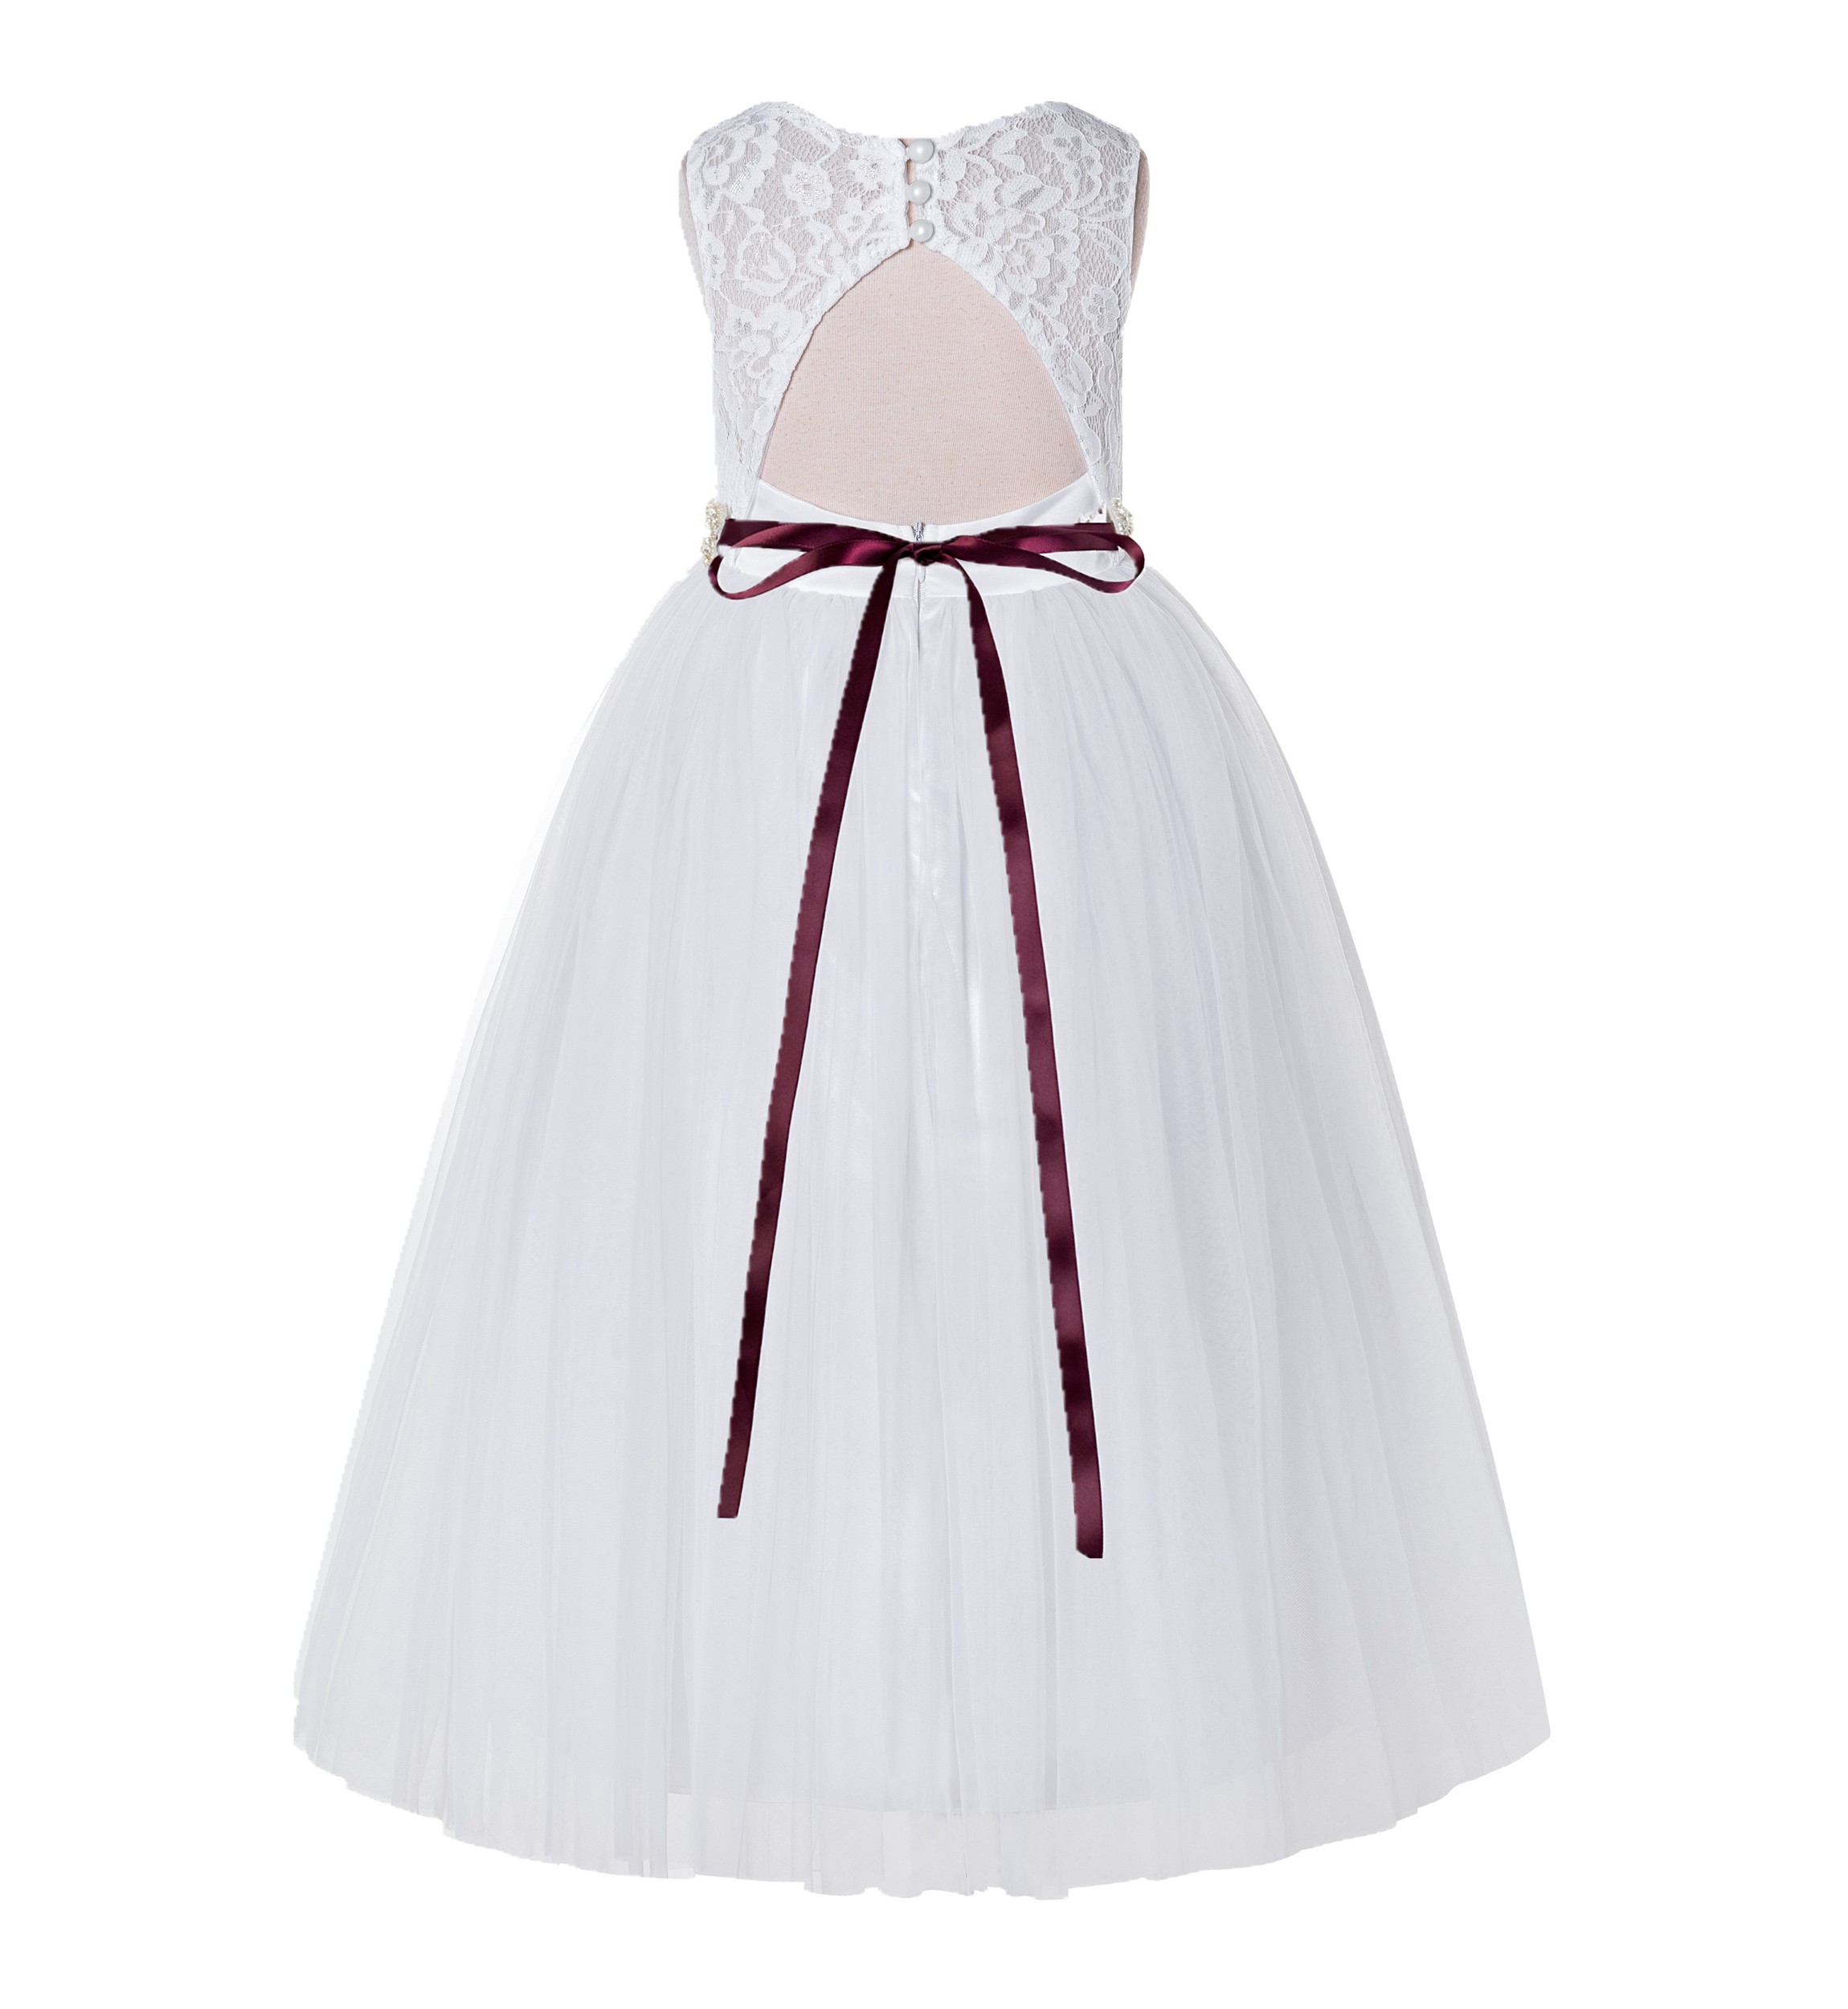 White / Burgundy A-Line Lace Flower Girl Dress 178R2